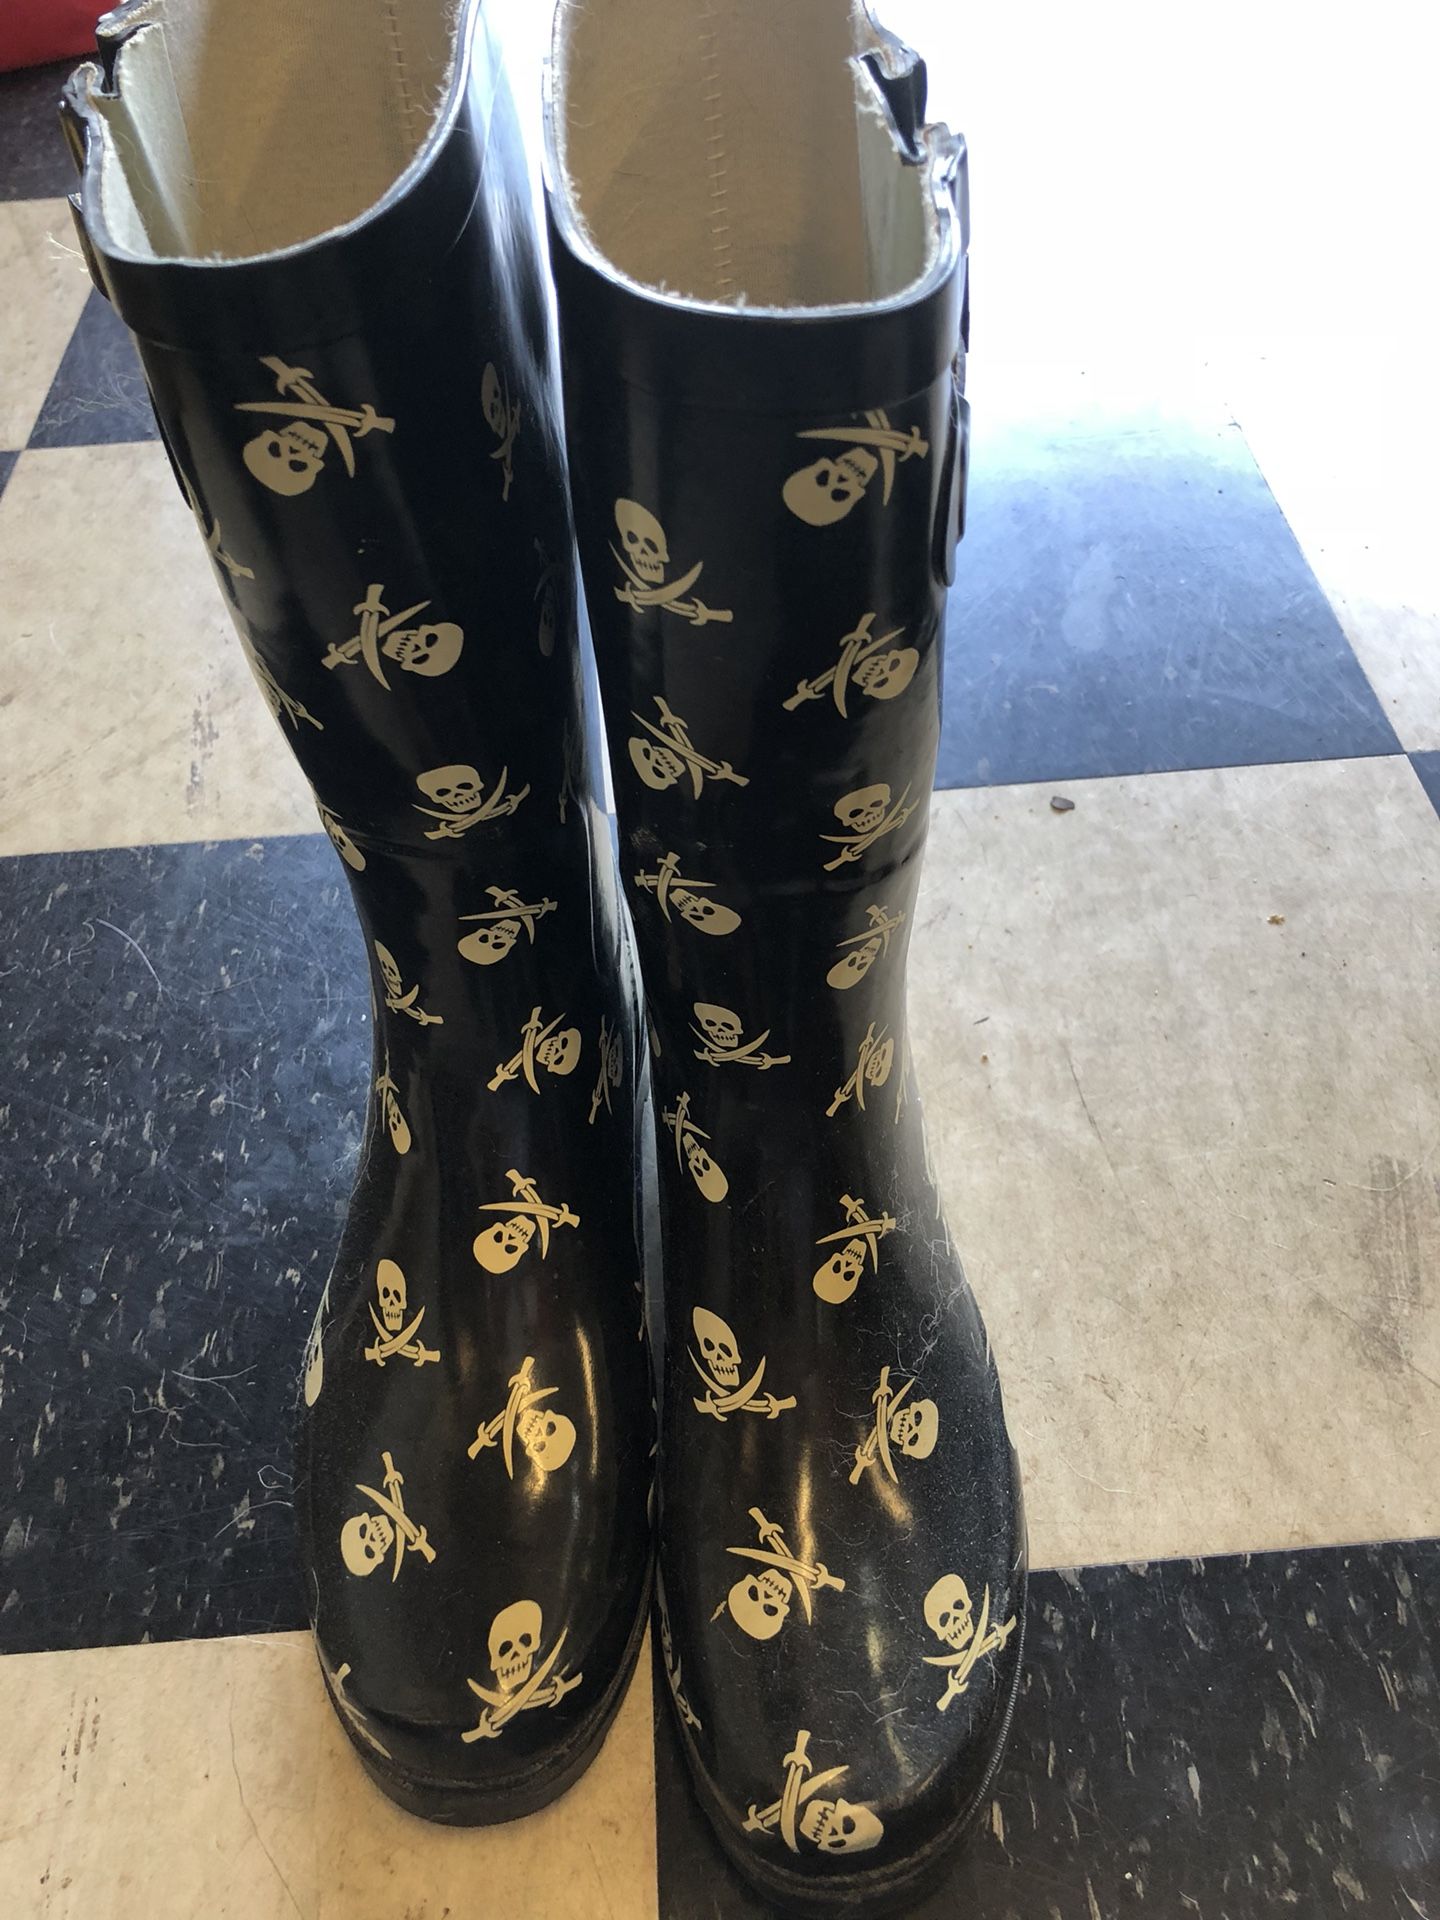 Rain boots size 10 women’s